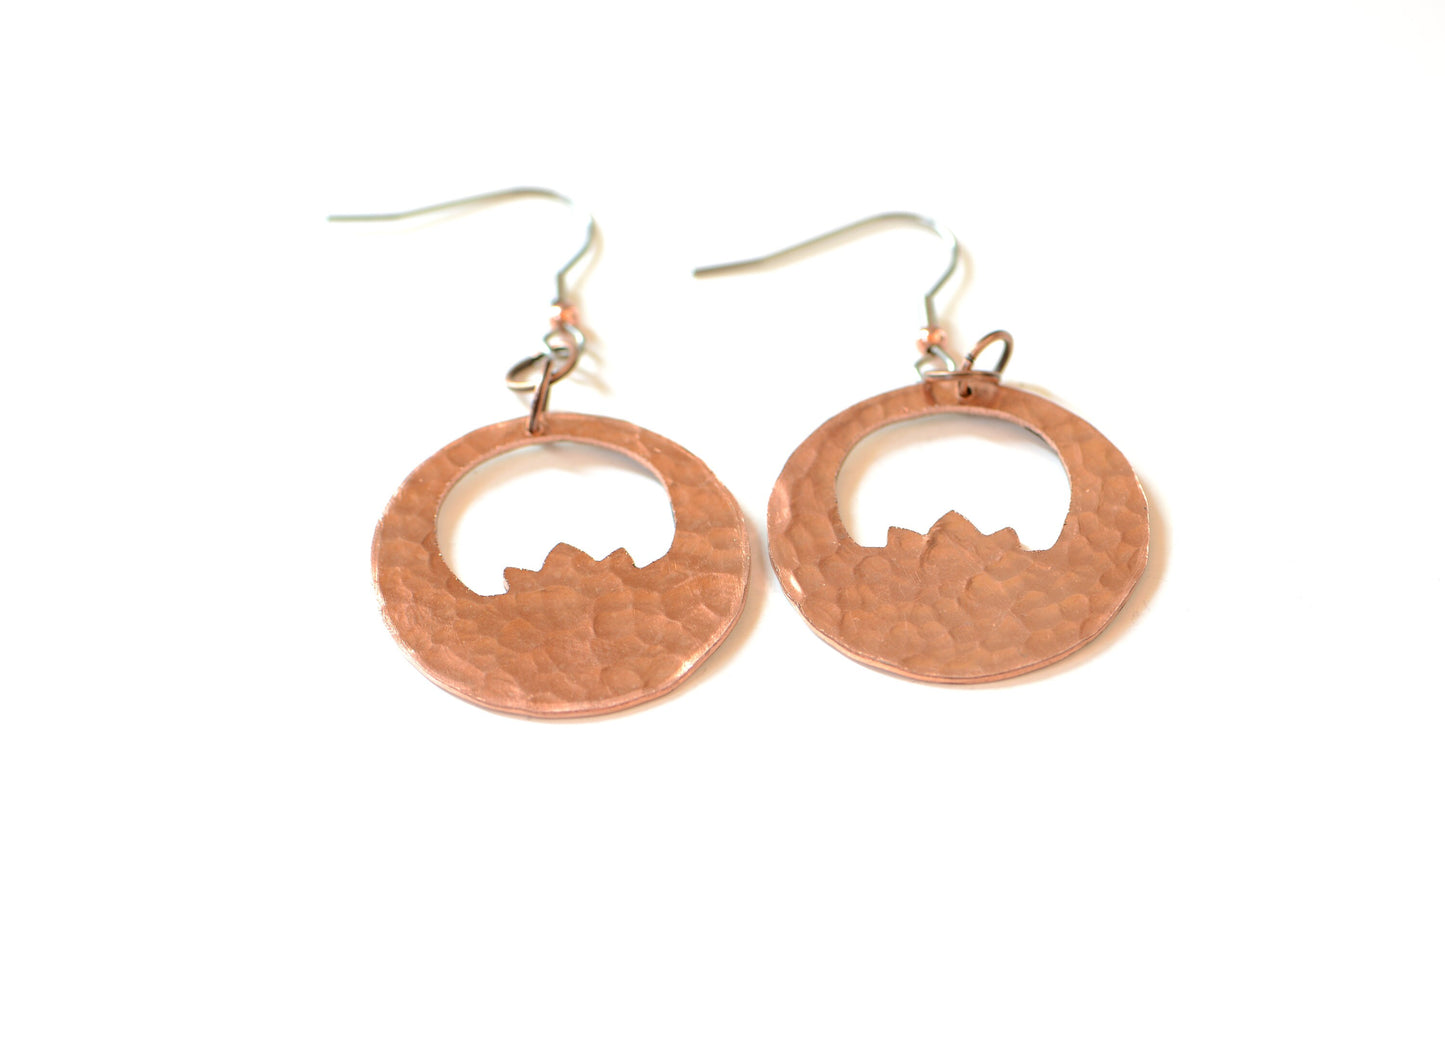 copper lotus earrings - dangle earrings - yoga inspired earrings - boho style